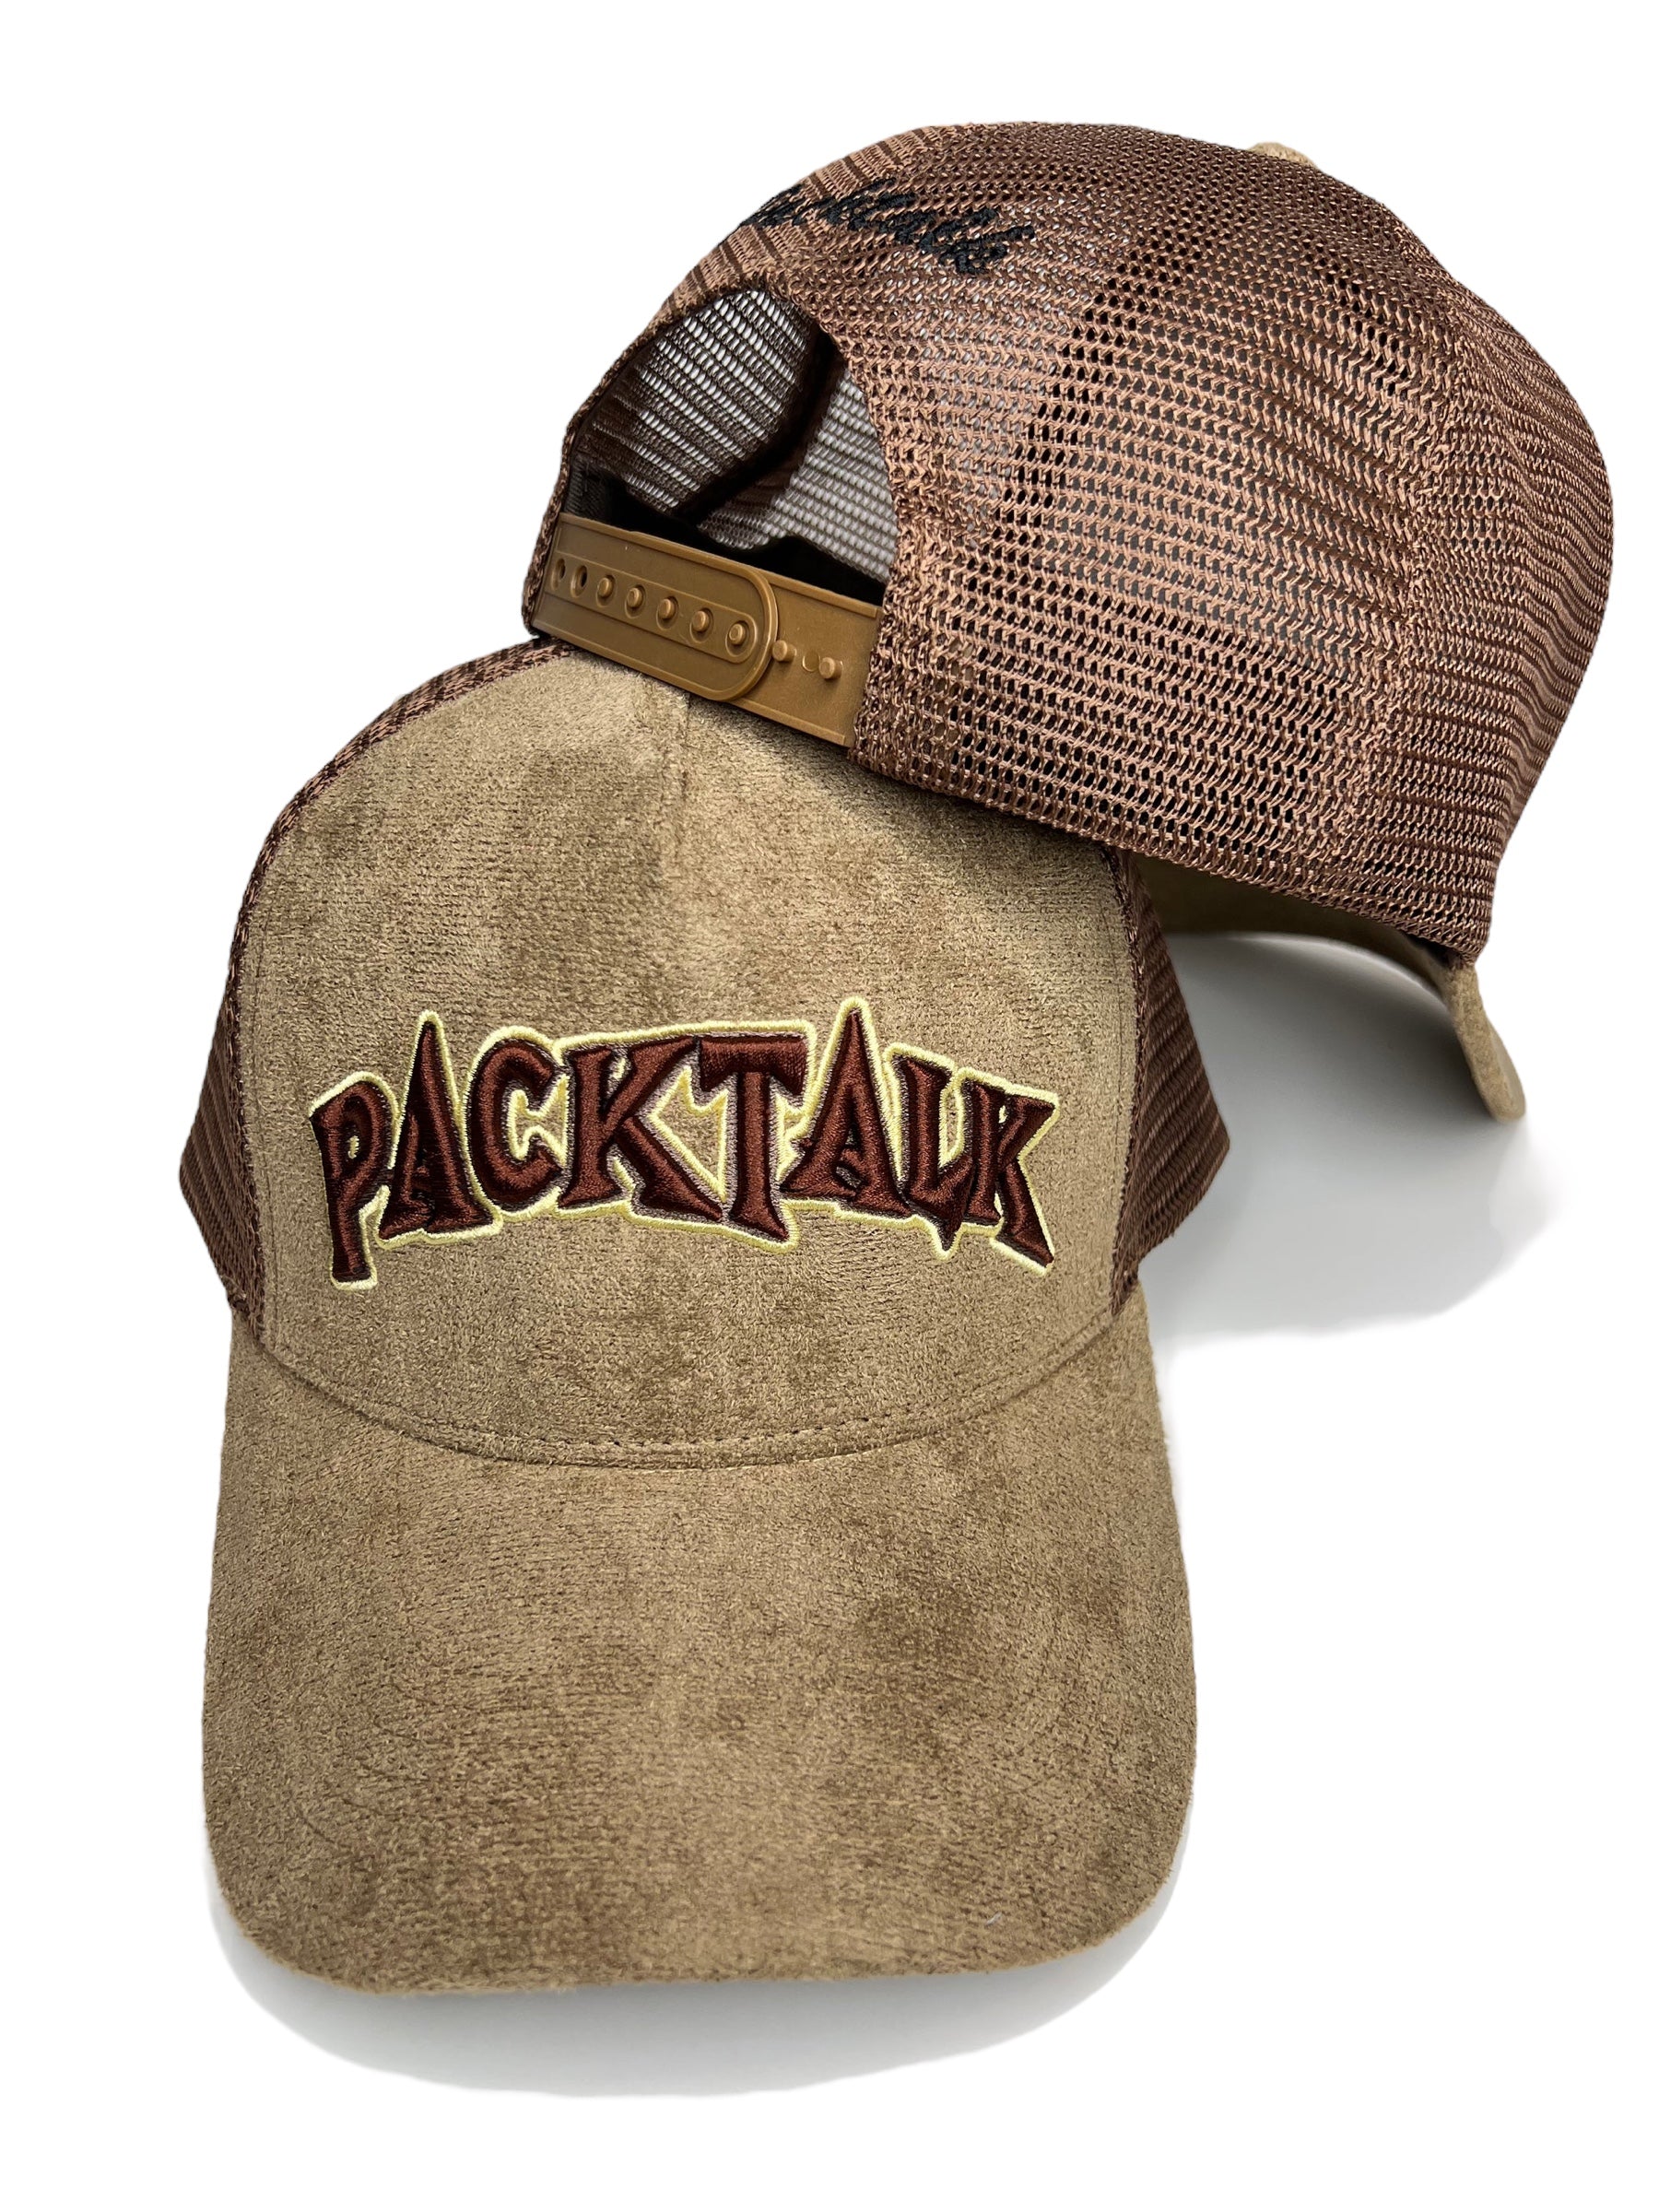 Packtalk Trucker Hats